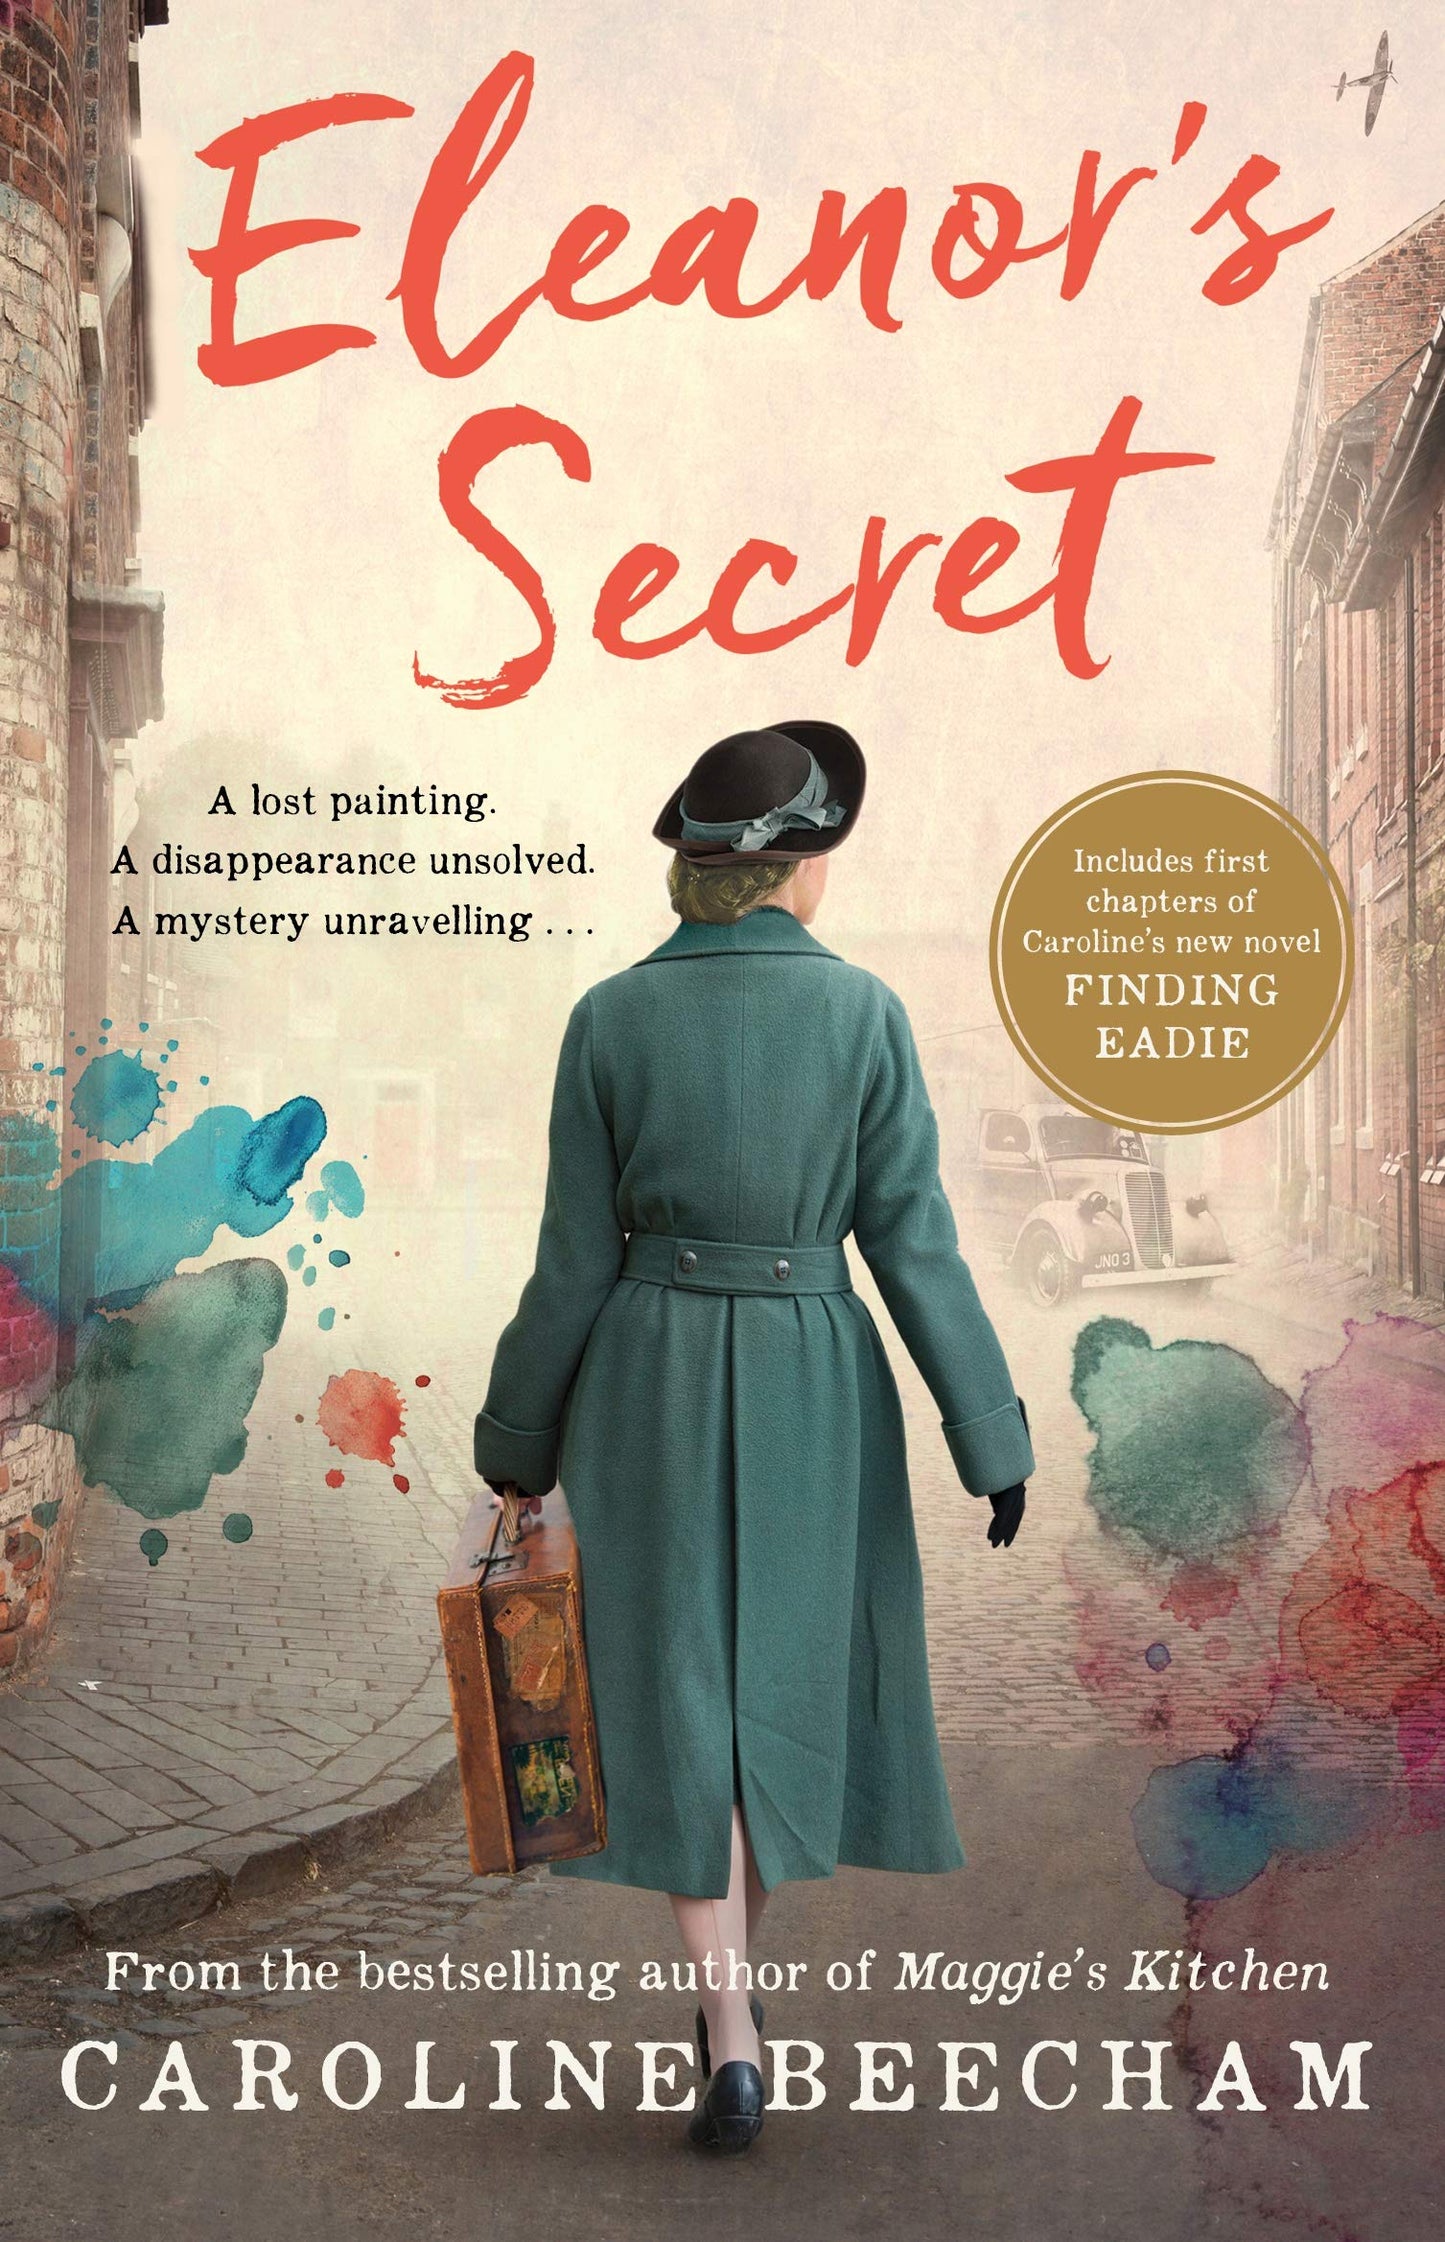 Eleanor's Secret by Caroline Beecham (Original)